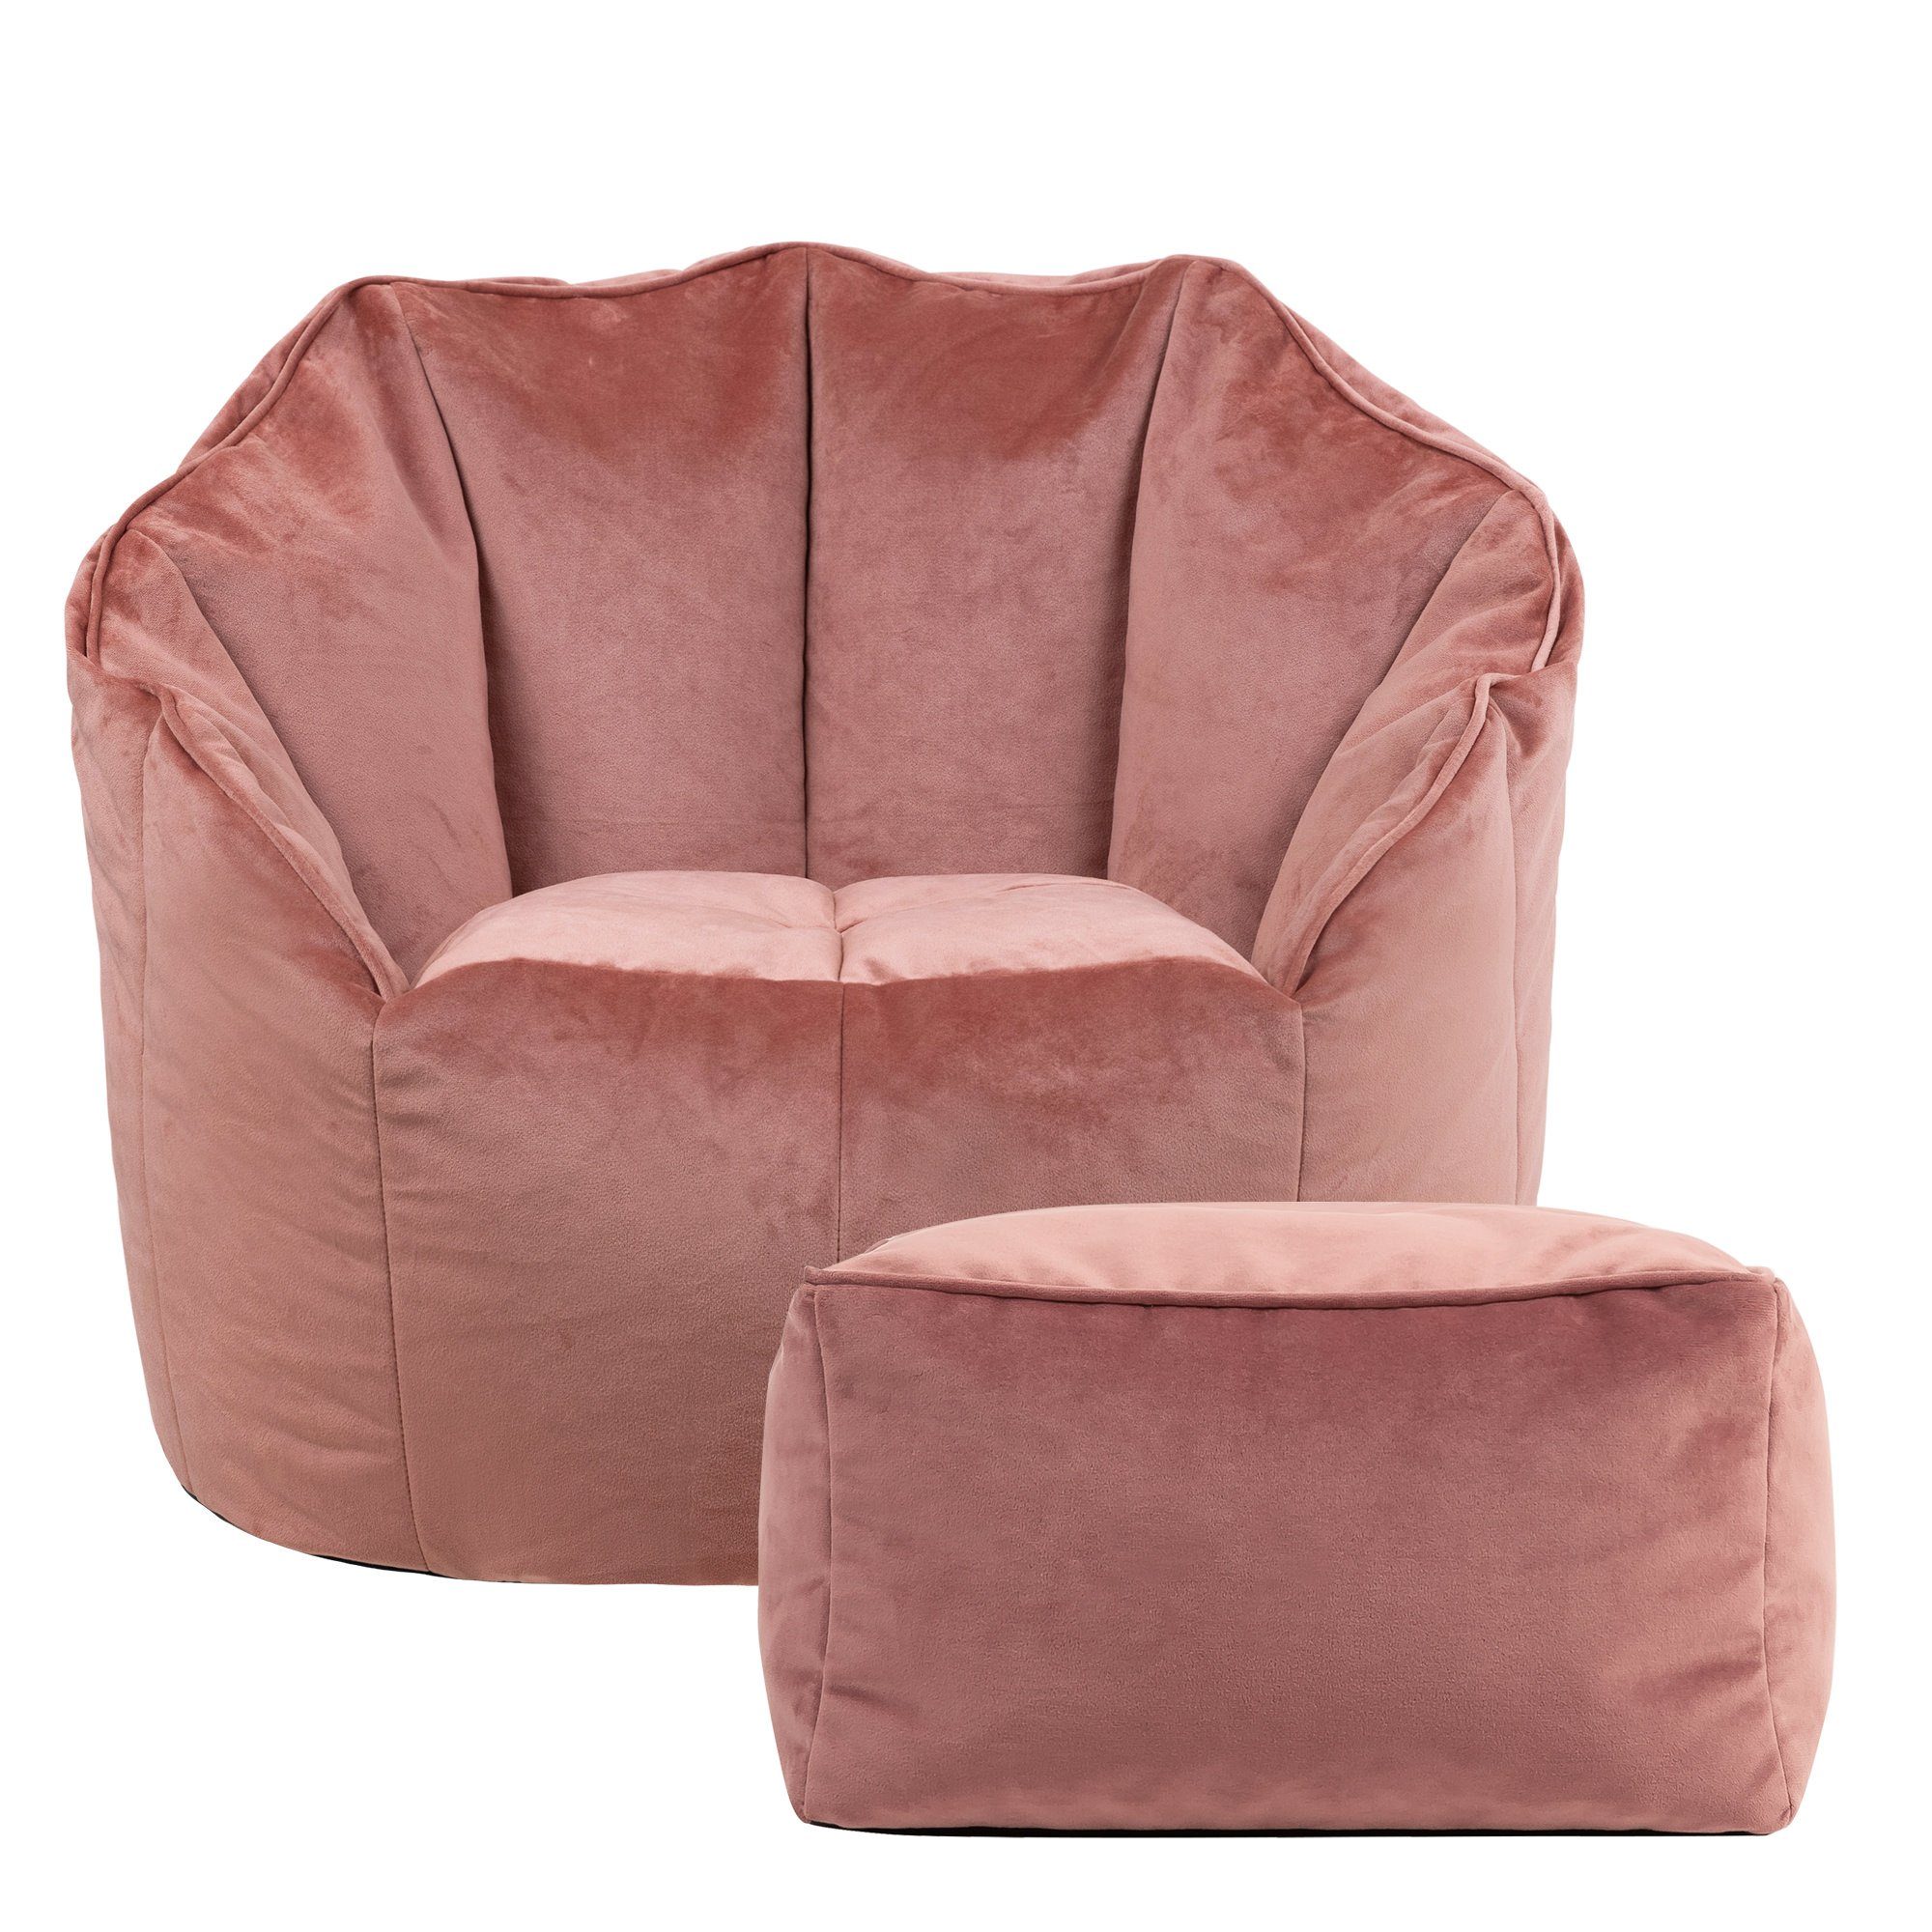 „Sirena“ Plüschsamt Sessel icon Sitzpouf Sitzsack aus Sitzsack mit rosa